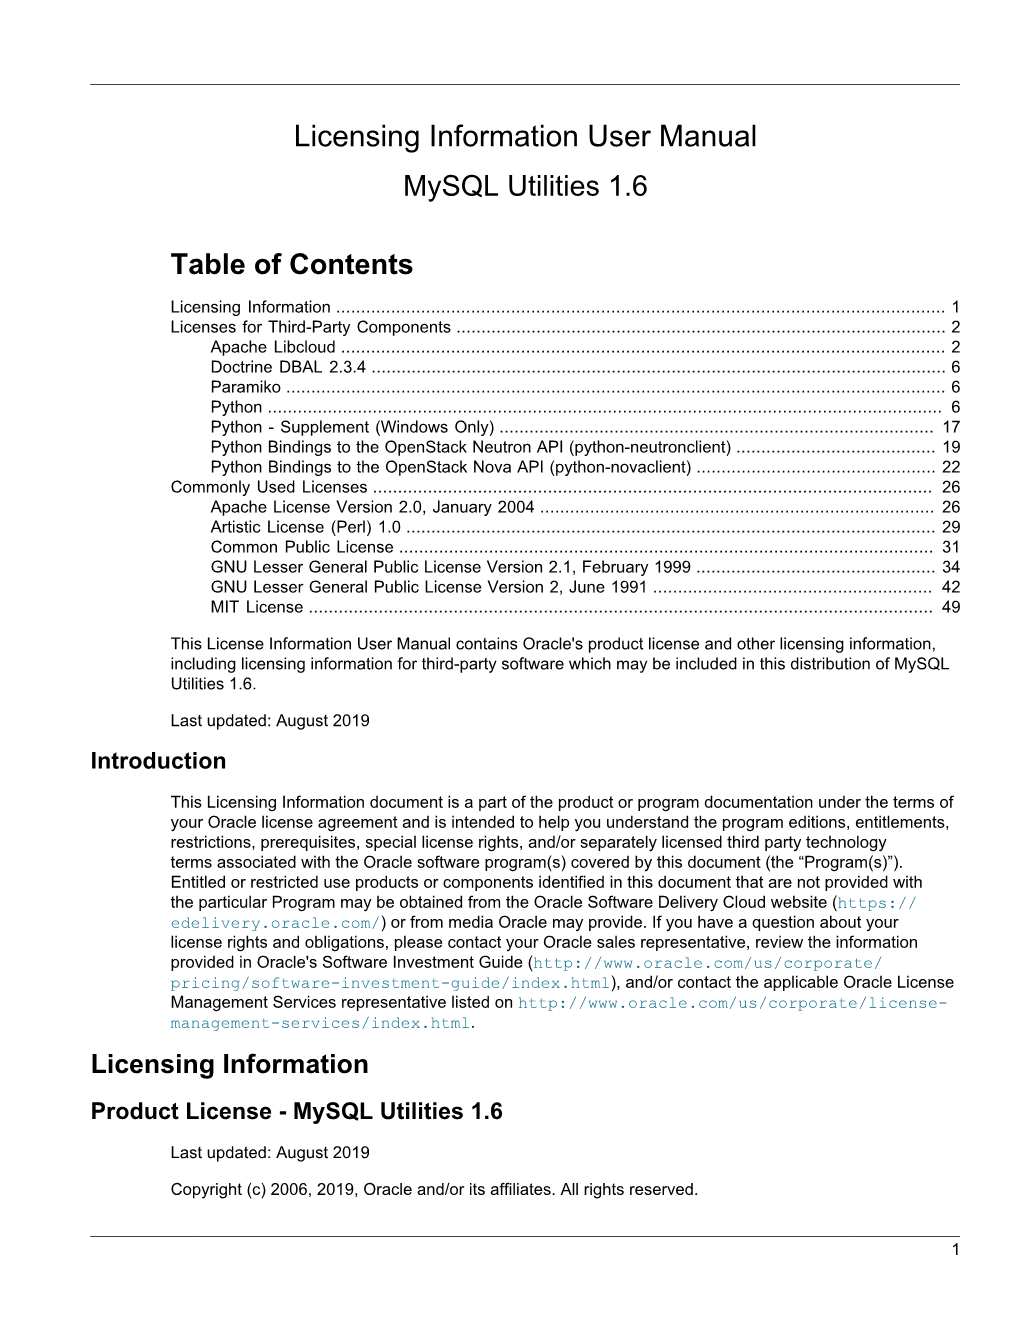 Licensing Information User Manual Mysql Utilities 1.6